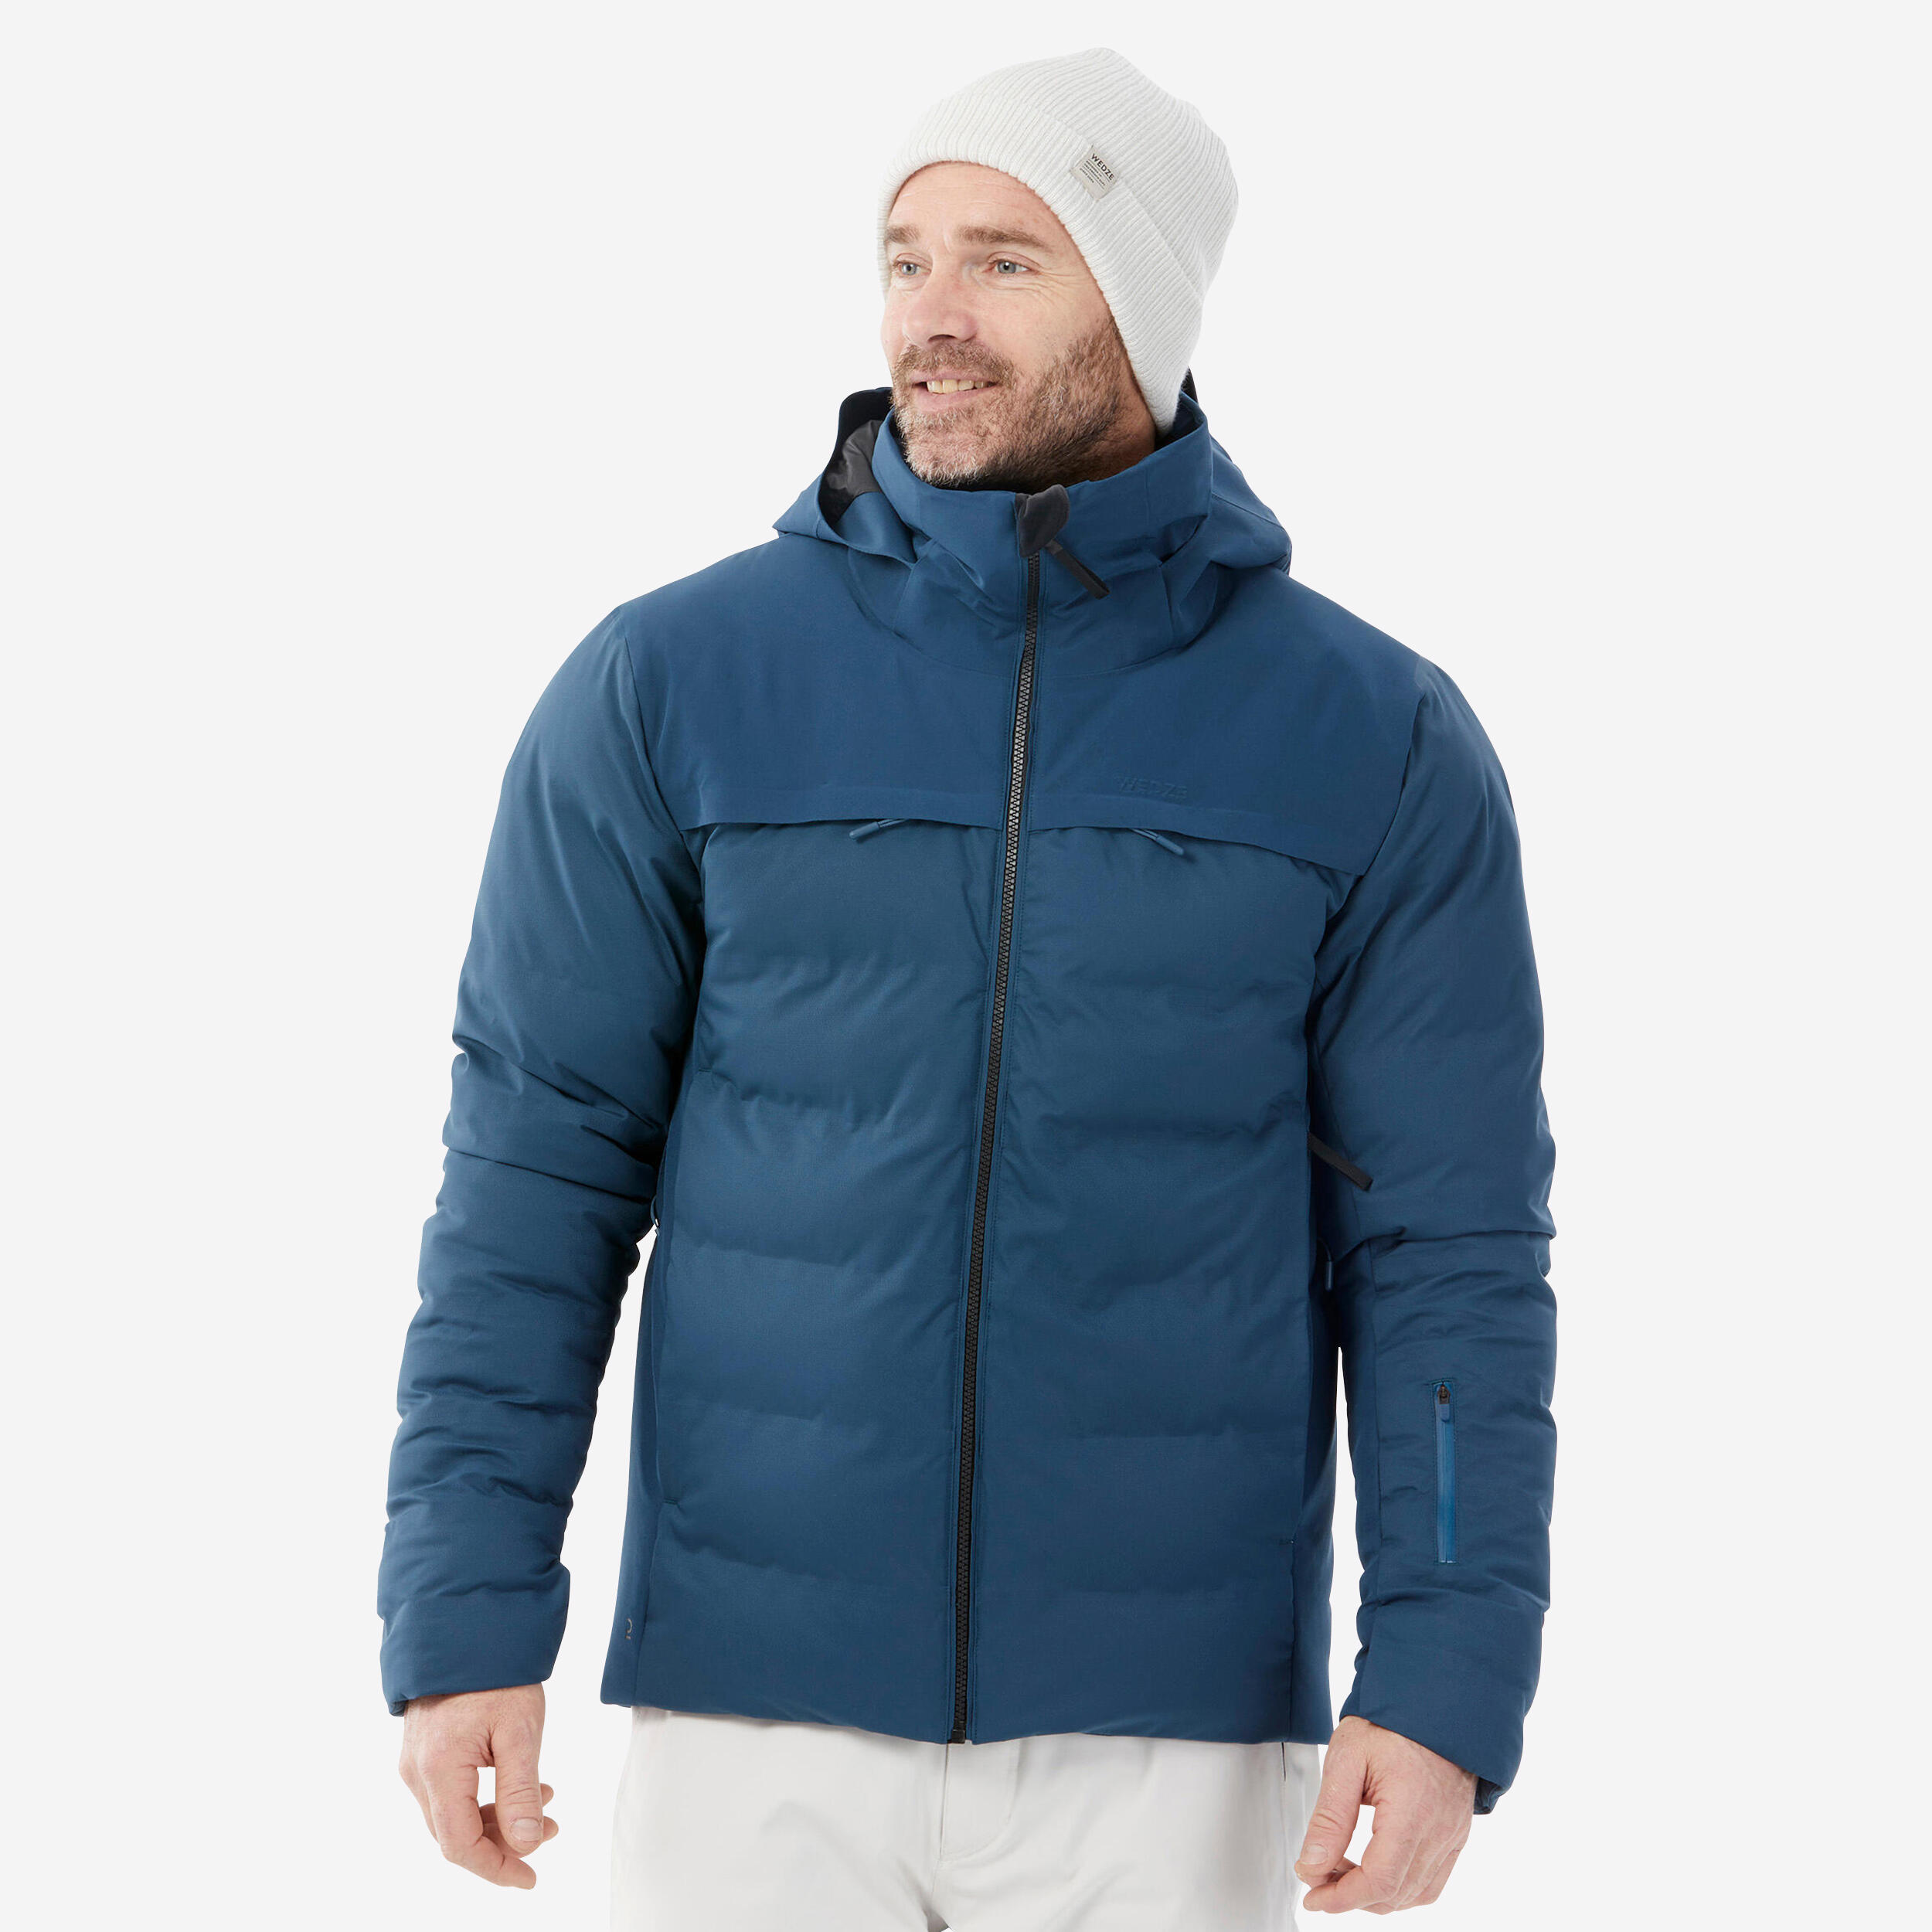 Men’s Ski Jacket - 900 Blue - Inkpot blue - Wedze - Decathlon